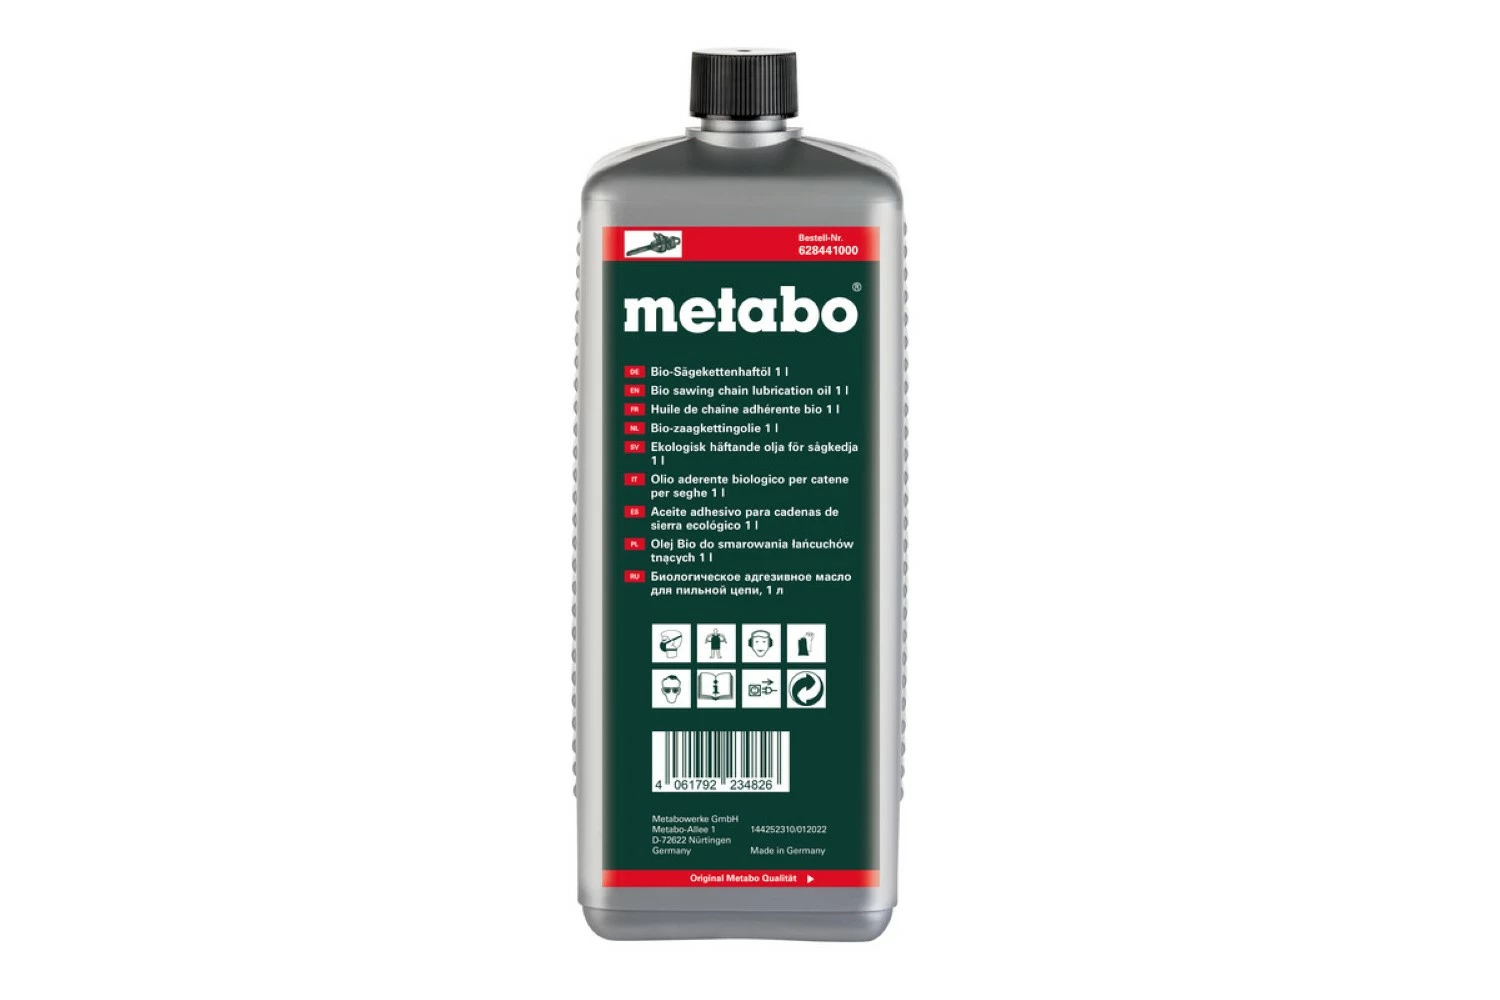 Metabo 628441000 Bio-zaagkettingolie - 1L-image